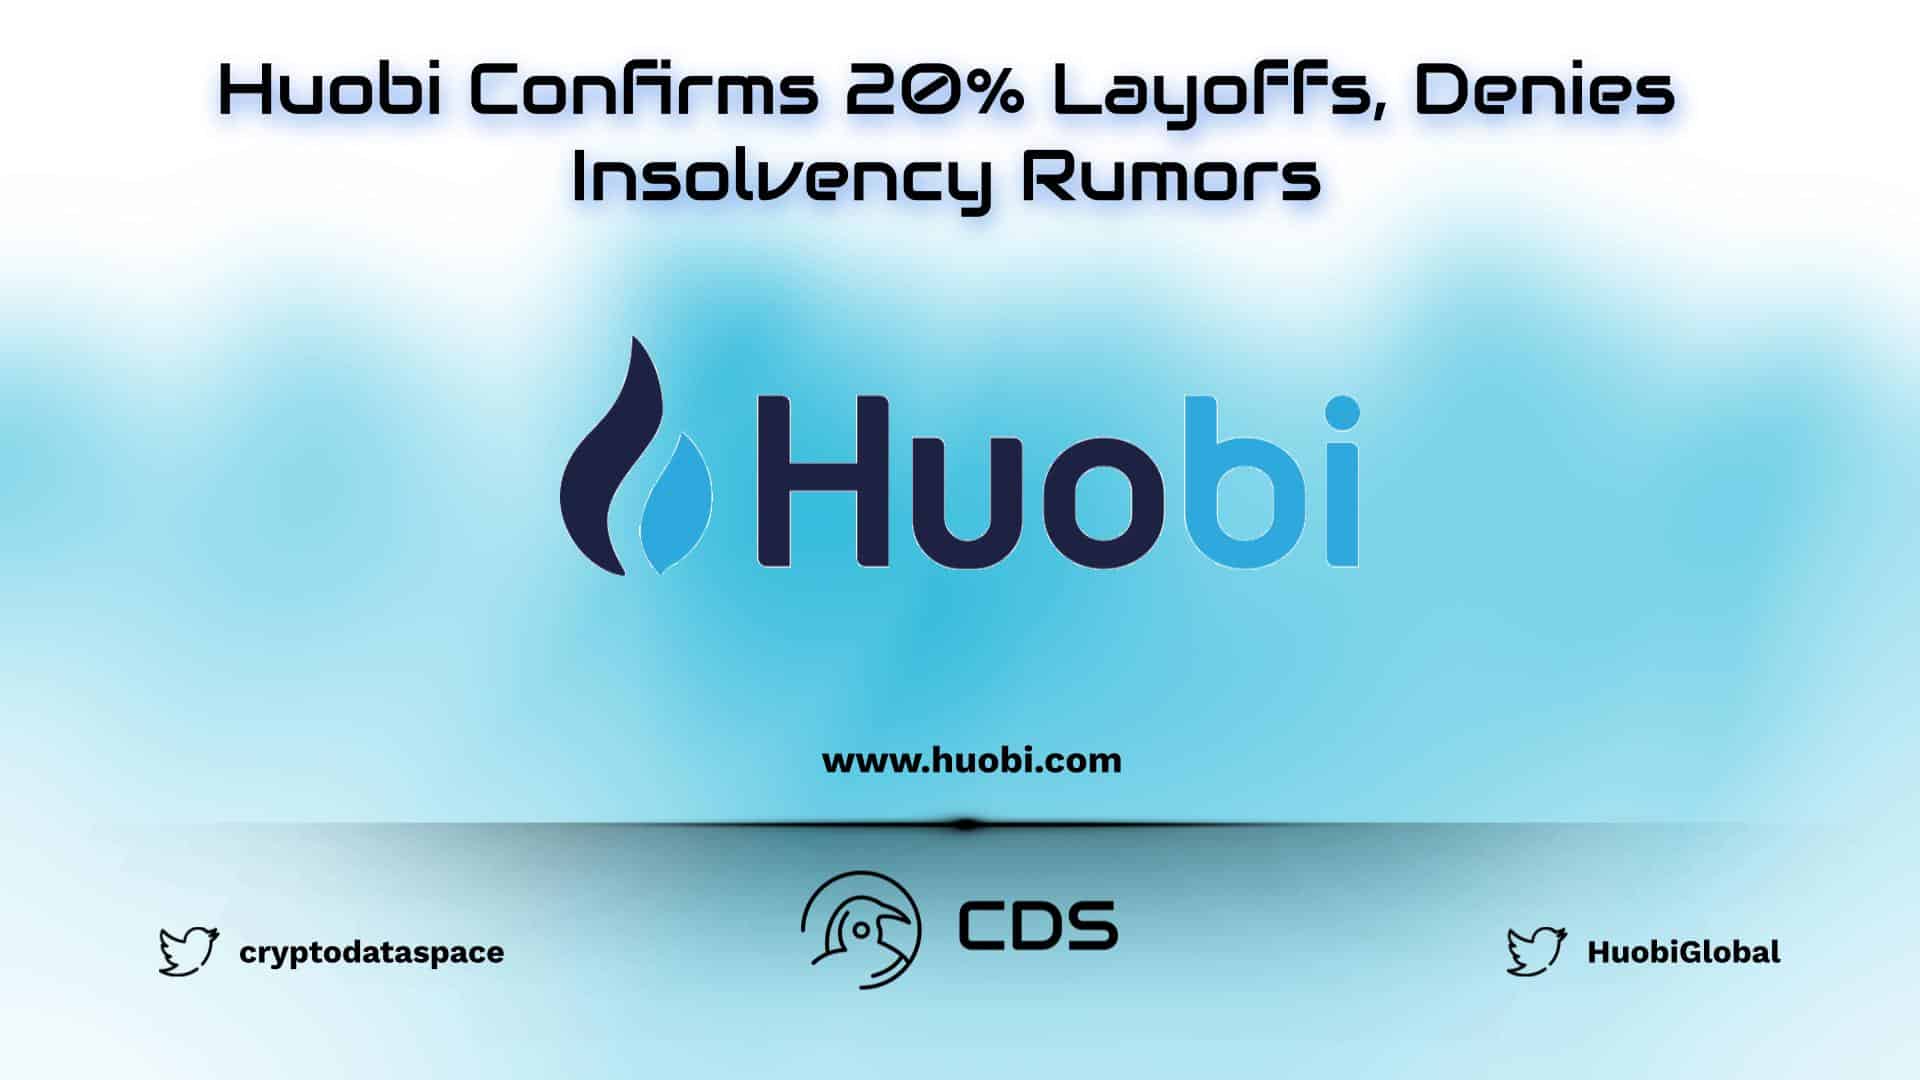 Huobi Confirms 20% Layoffs, Denies Insolvency Rumors